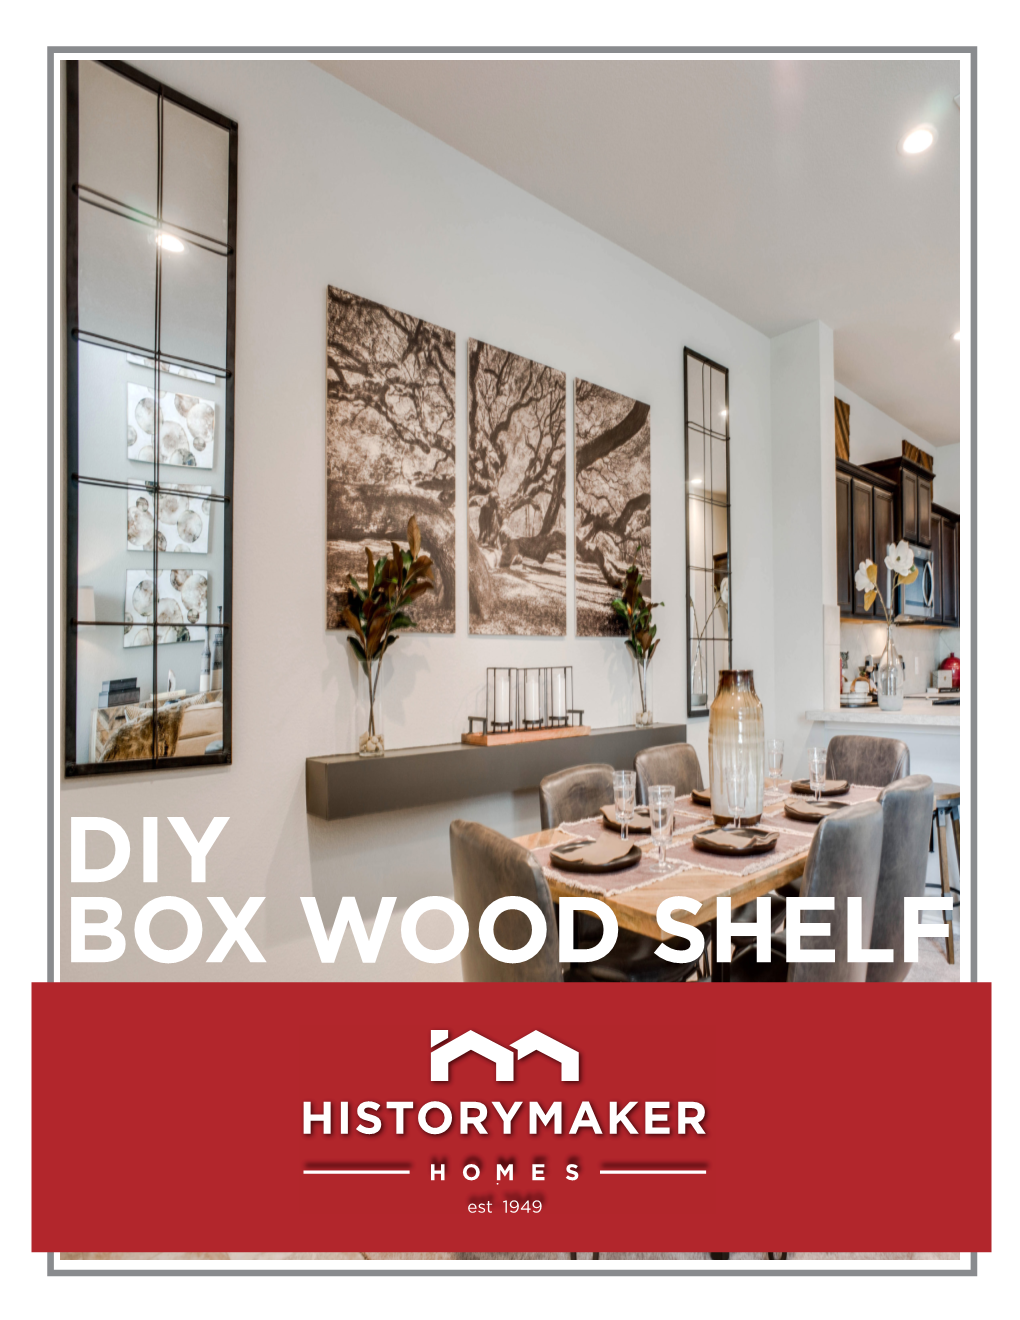 DIY BOX WOOD SHELF DIY 7’ BOX WOOD SHELF at BRENTWOOD PLACE Designed By: Sarah Ciesla for Historymaker Homes